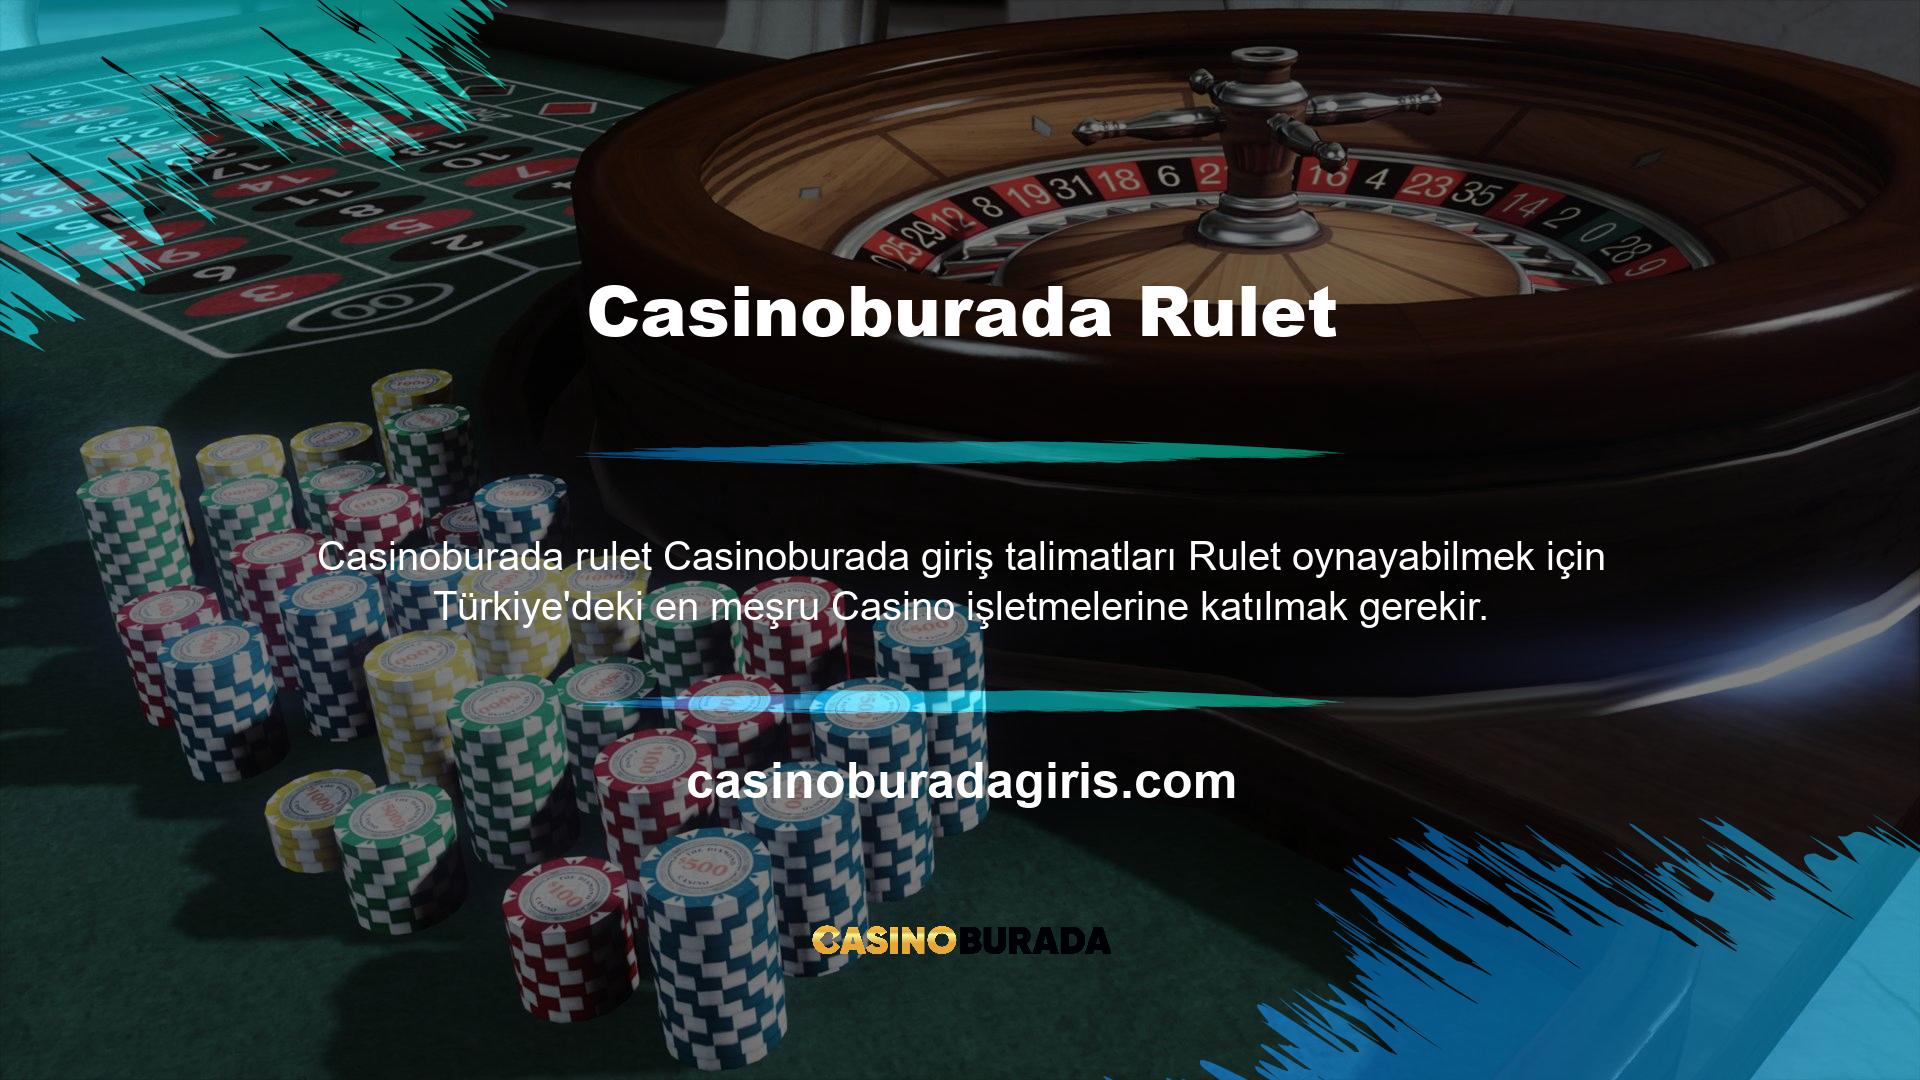 Casinoburada ruleti oynayarak para kazanabilirsiniz